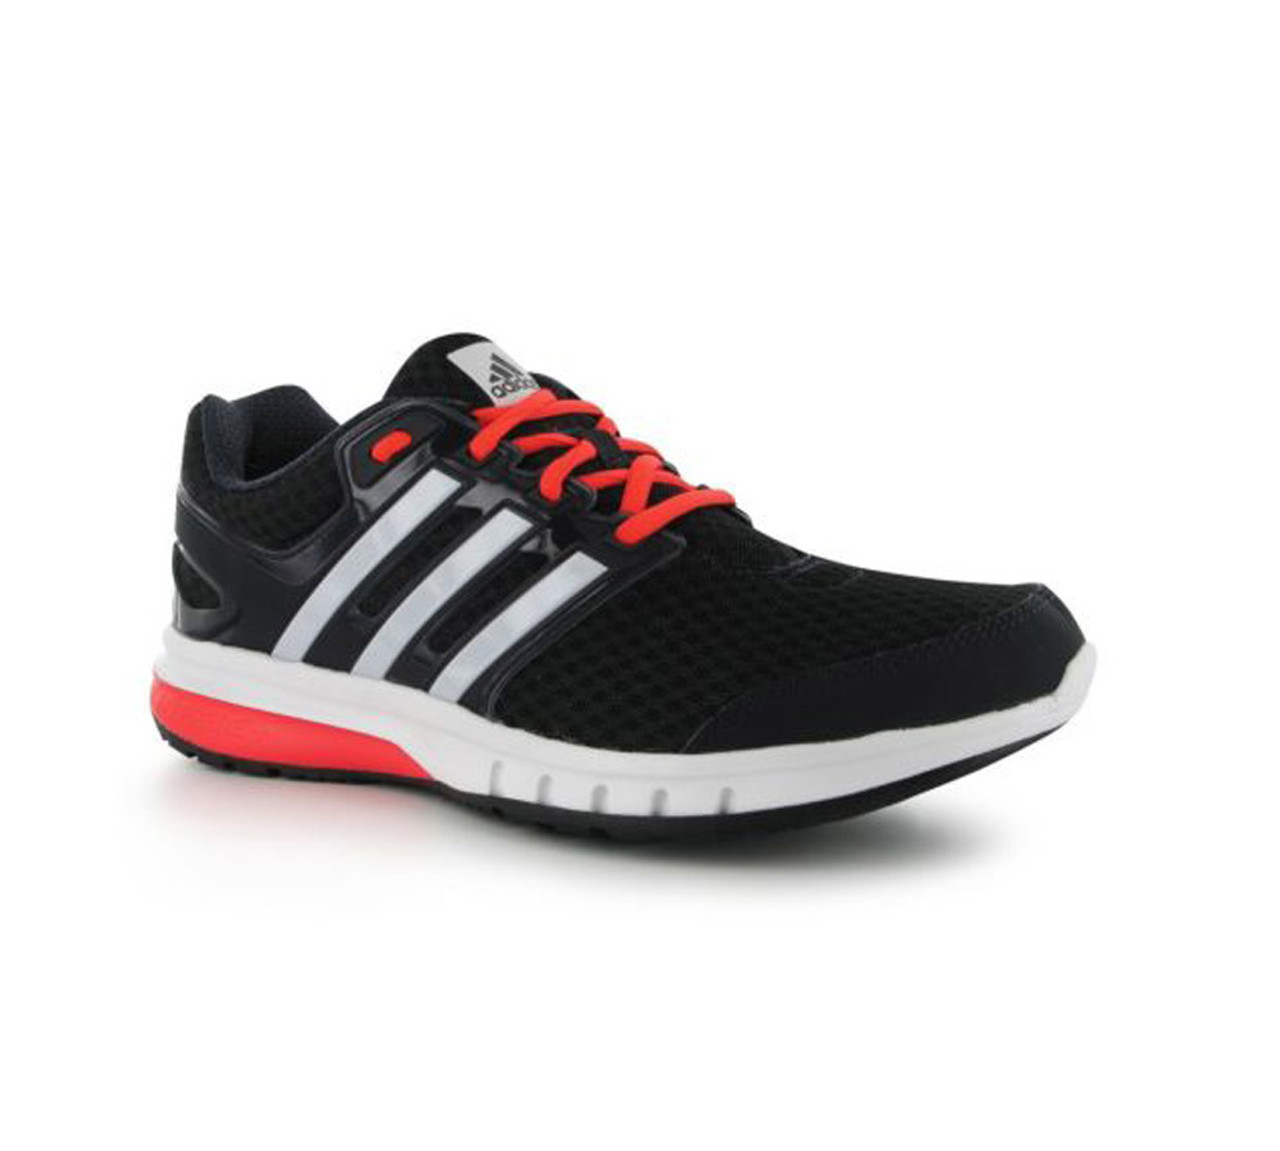 Adidas Men's Galaxy Elite FF Running Shoe - Black | Discount Men's Athletic Shoes & More - Shoolu.com